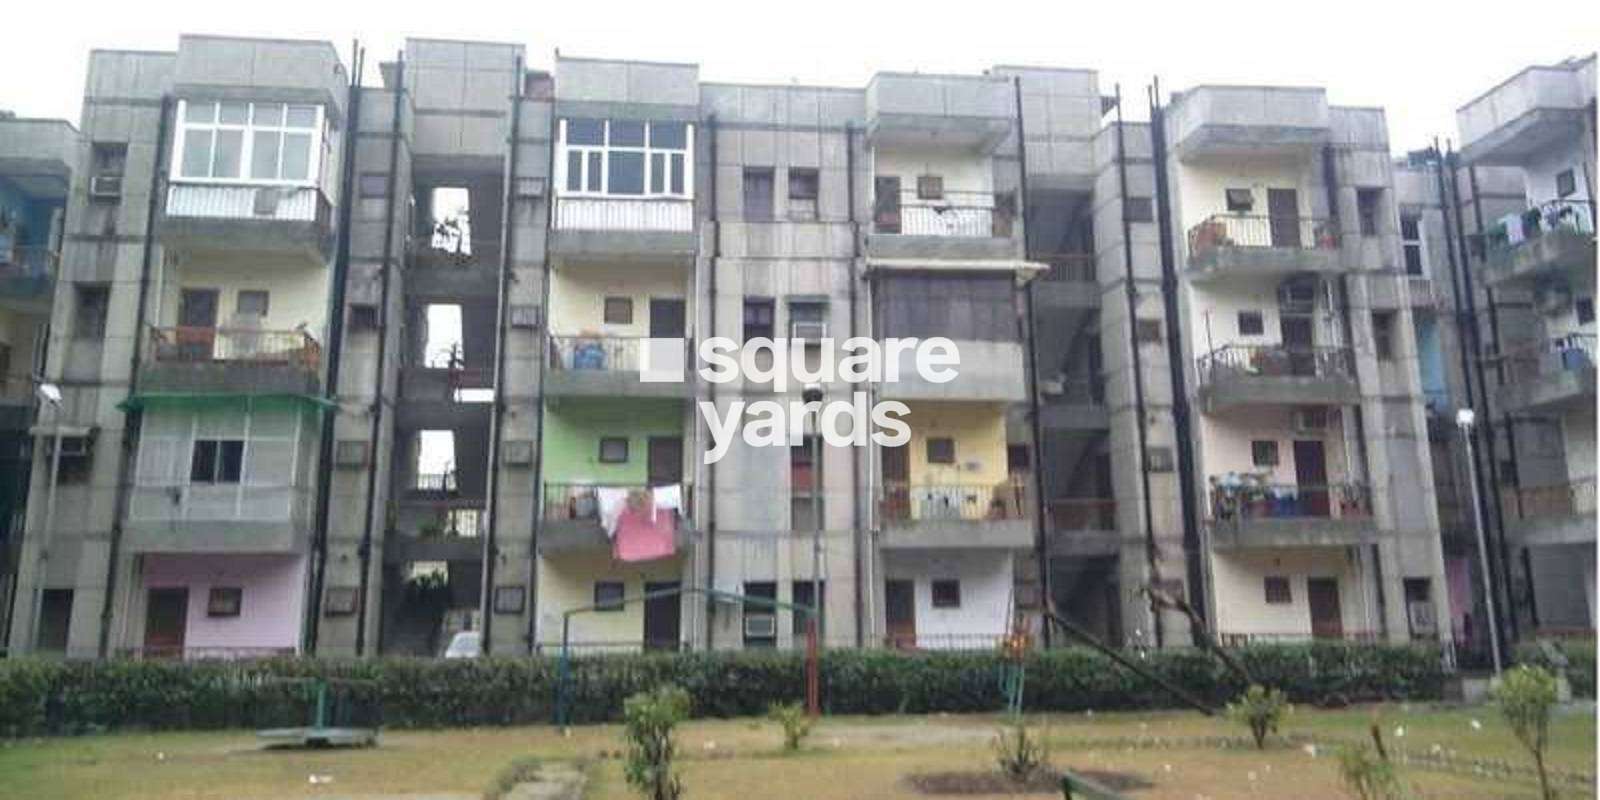 Jagriti Apartments Cover Image